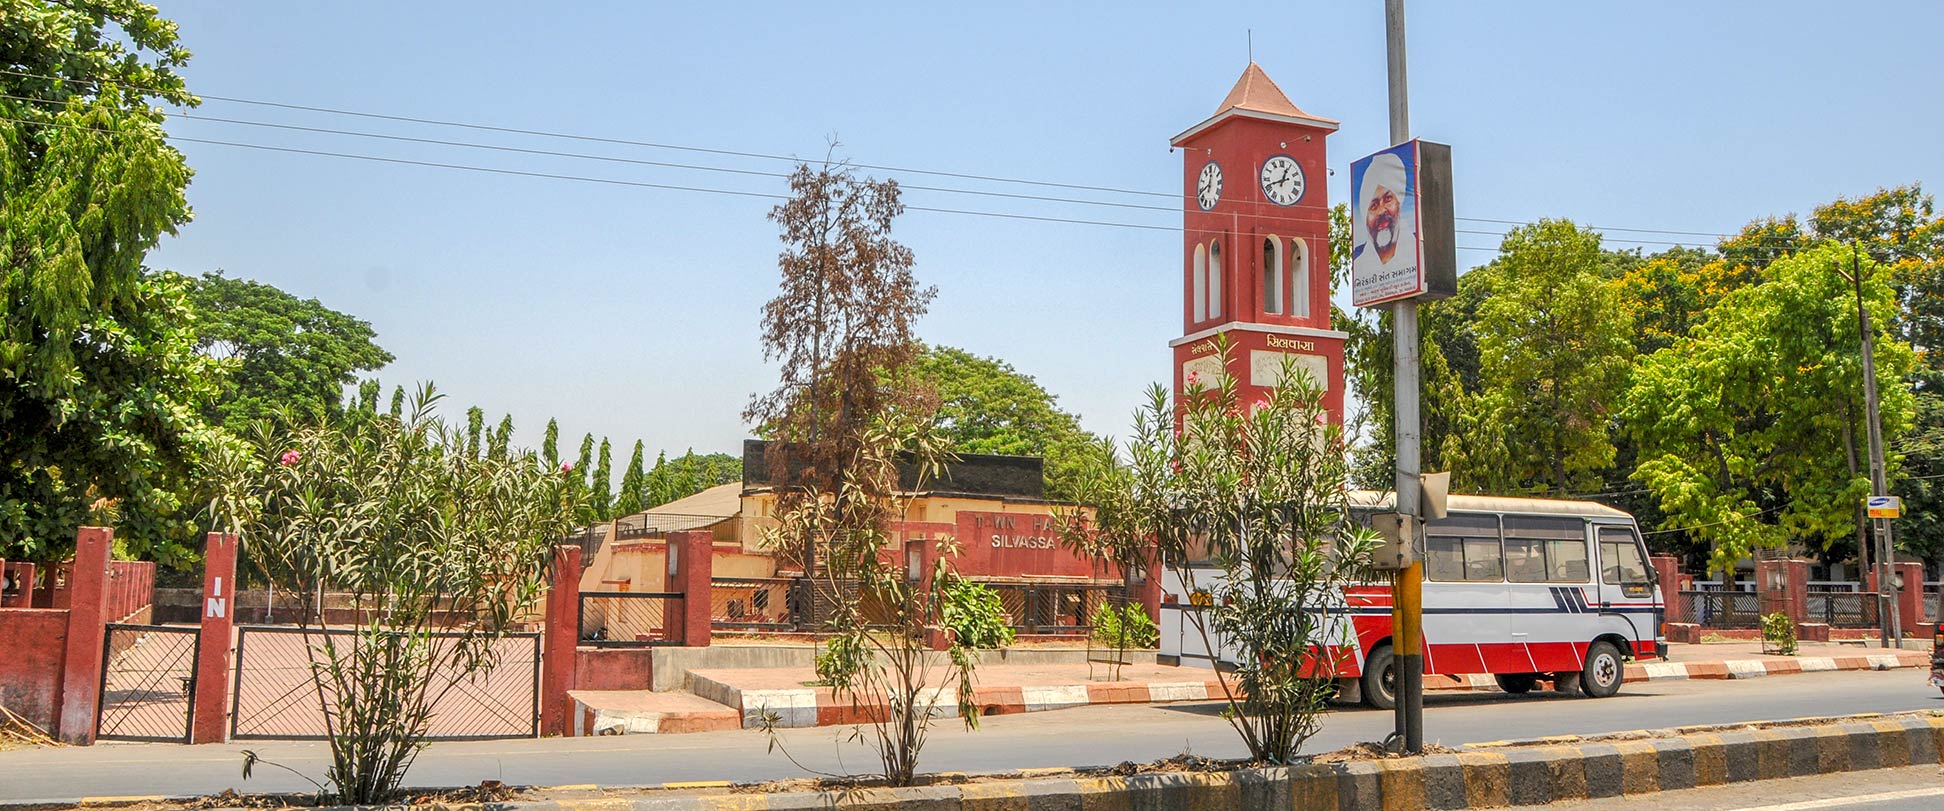 Town hall and clock tower of Silvassa, capital of UT Dadra and Nagar Haveli